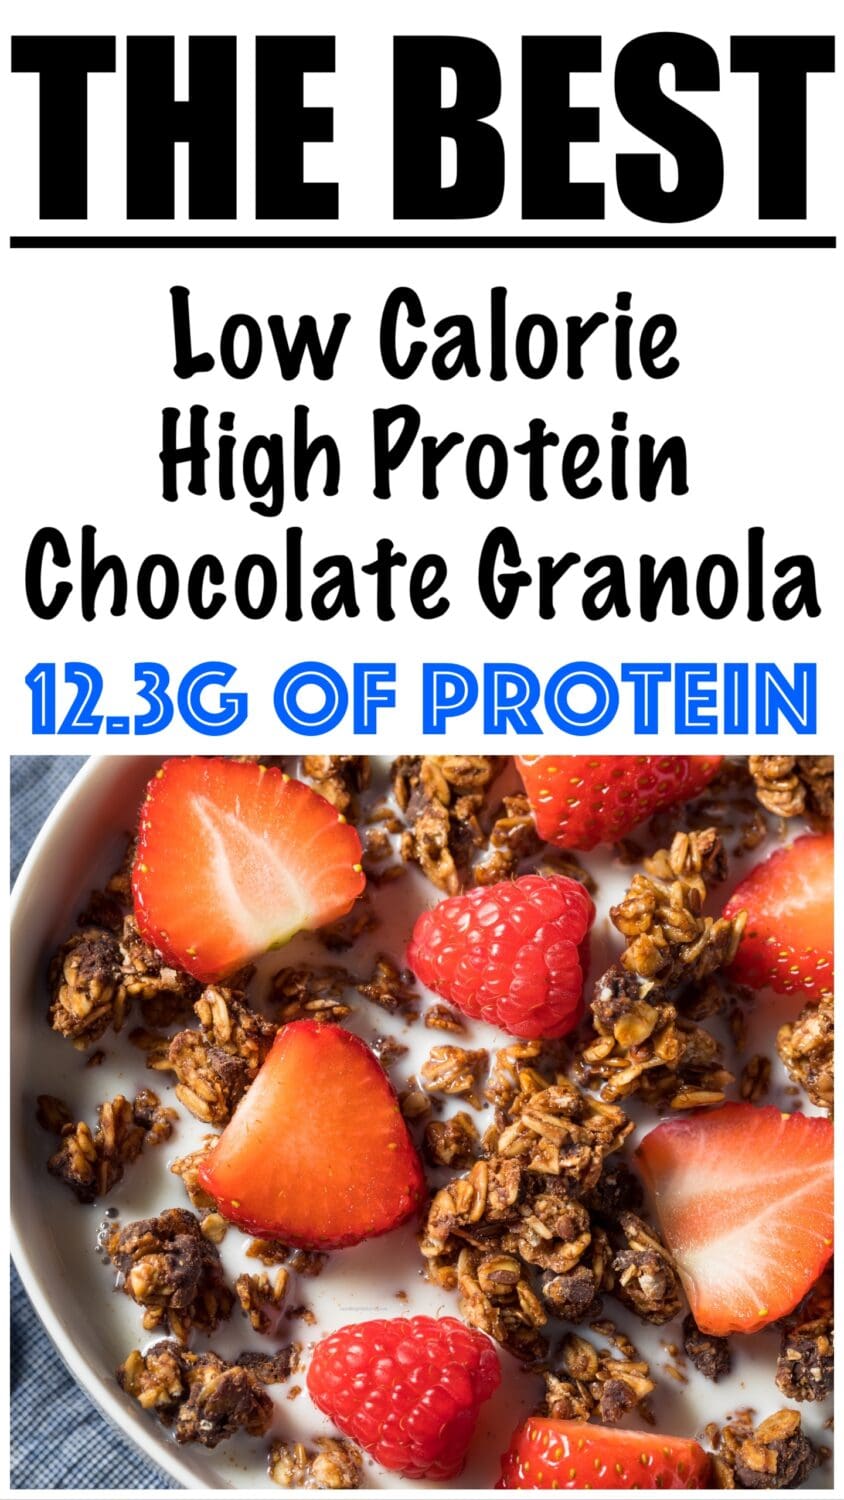 Low Calorie High Protein Chocolate Granola Recipe